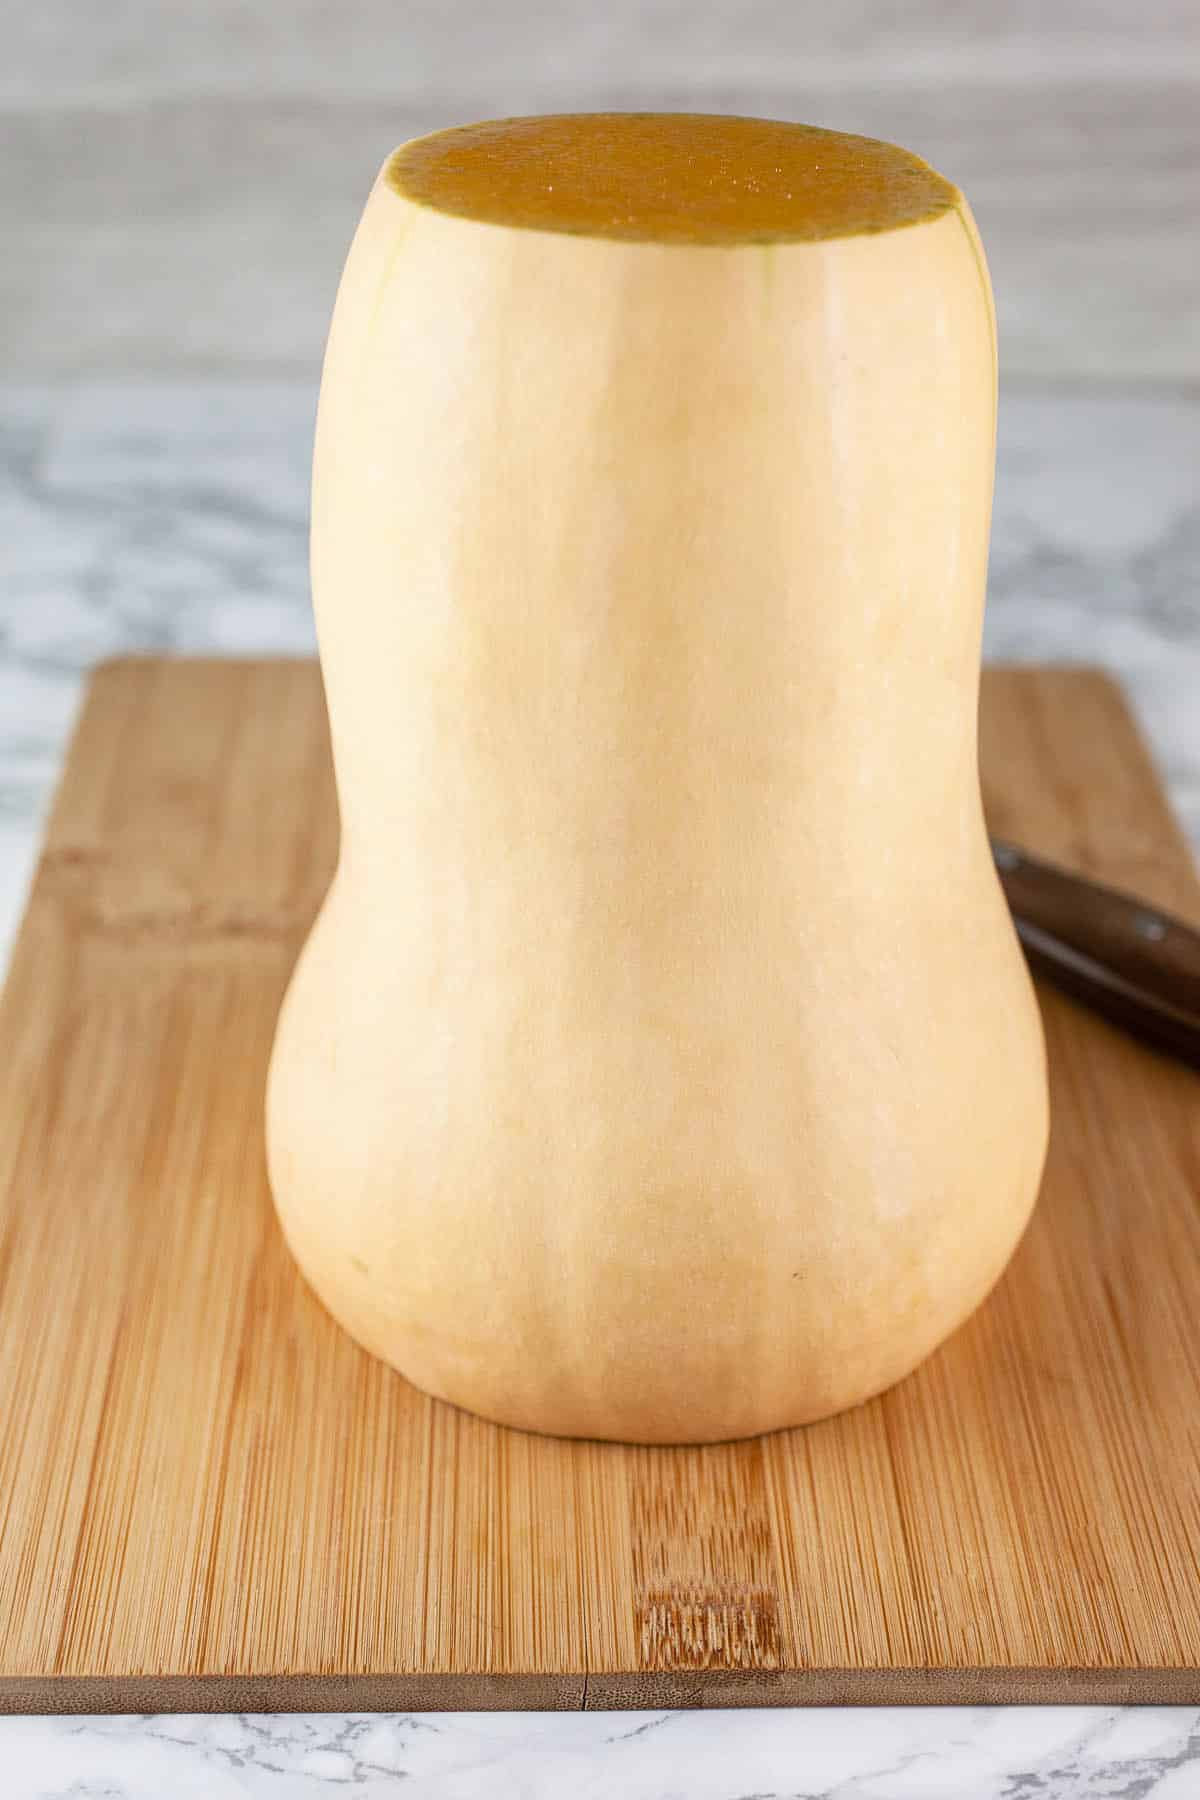 Butternut squash on wooden cutting board.